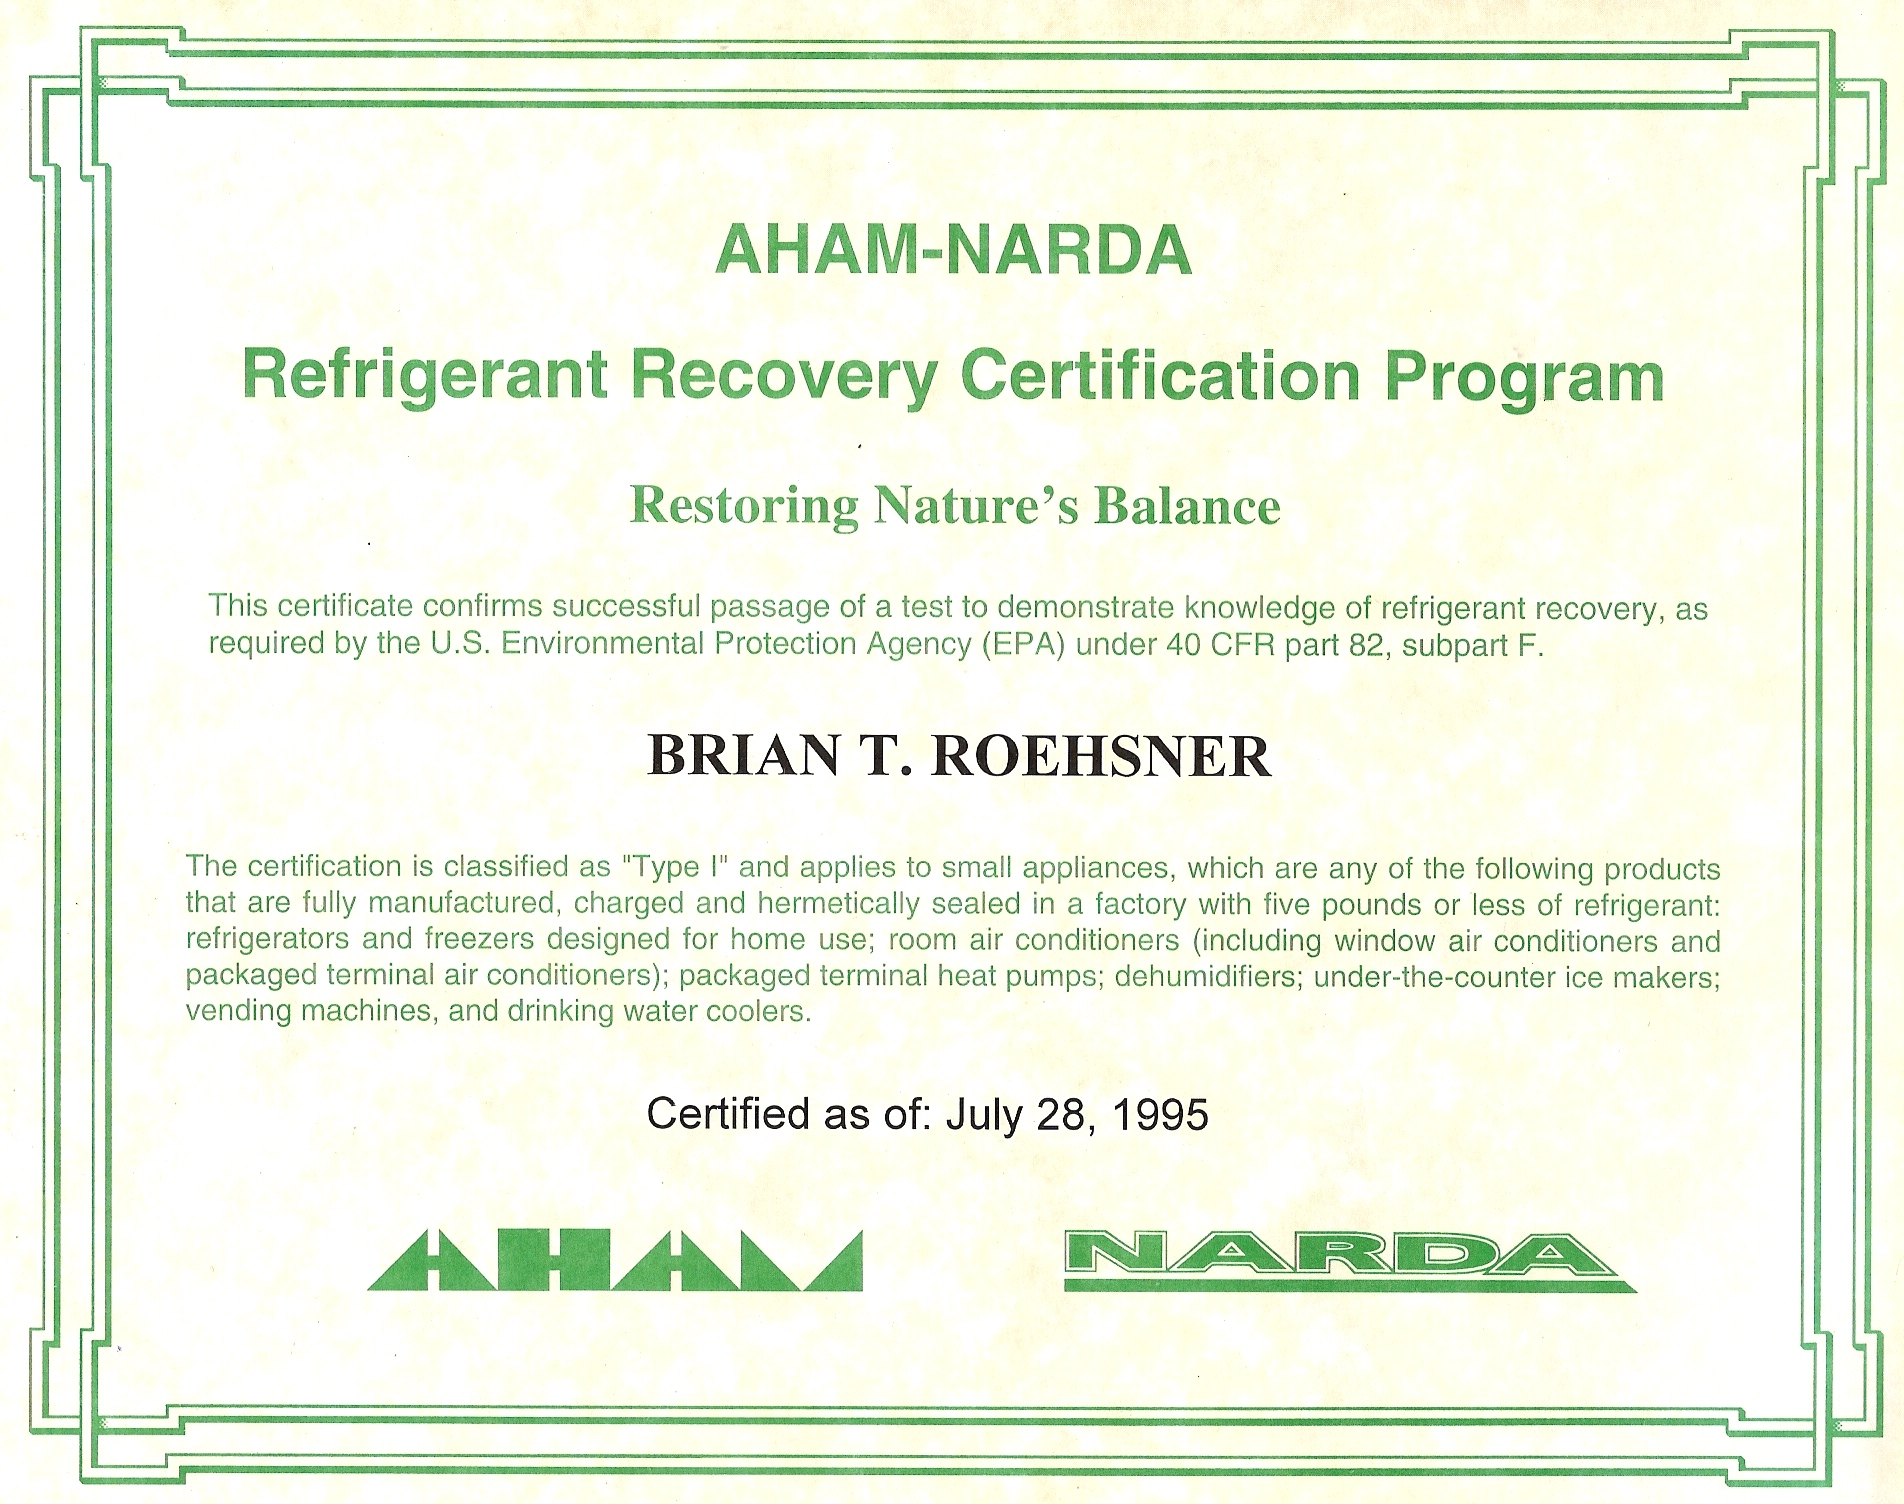 brian_aham-narda_certificate.jpg